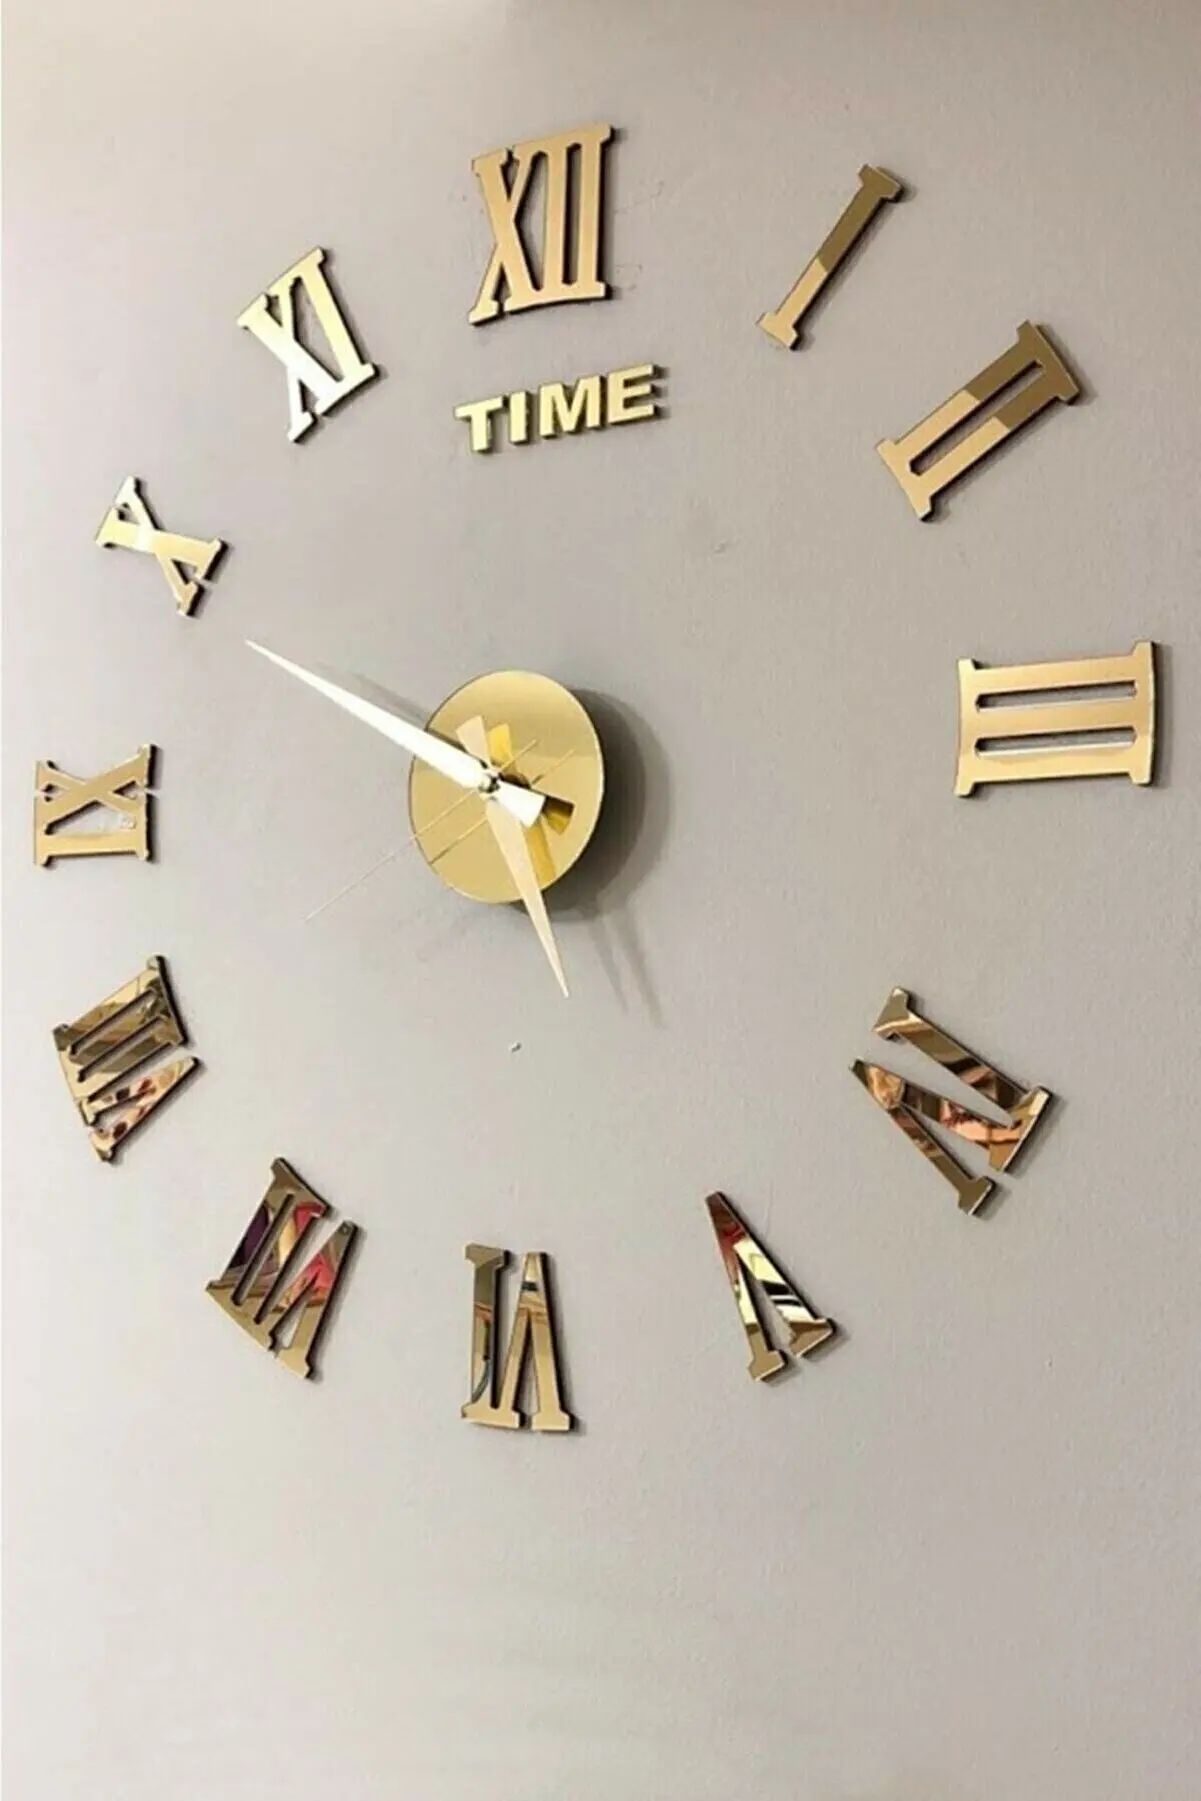 

3D Wall Clock Mirror Wall Stickers Creative DIY Wall Clocks Removable Art Decal Sticker Home Decor Living Room Quartz Needle Hot